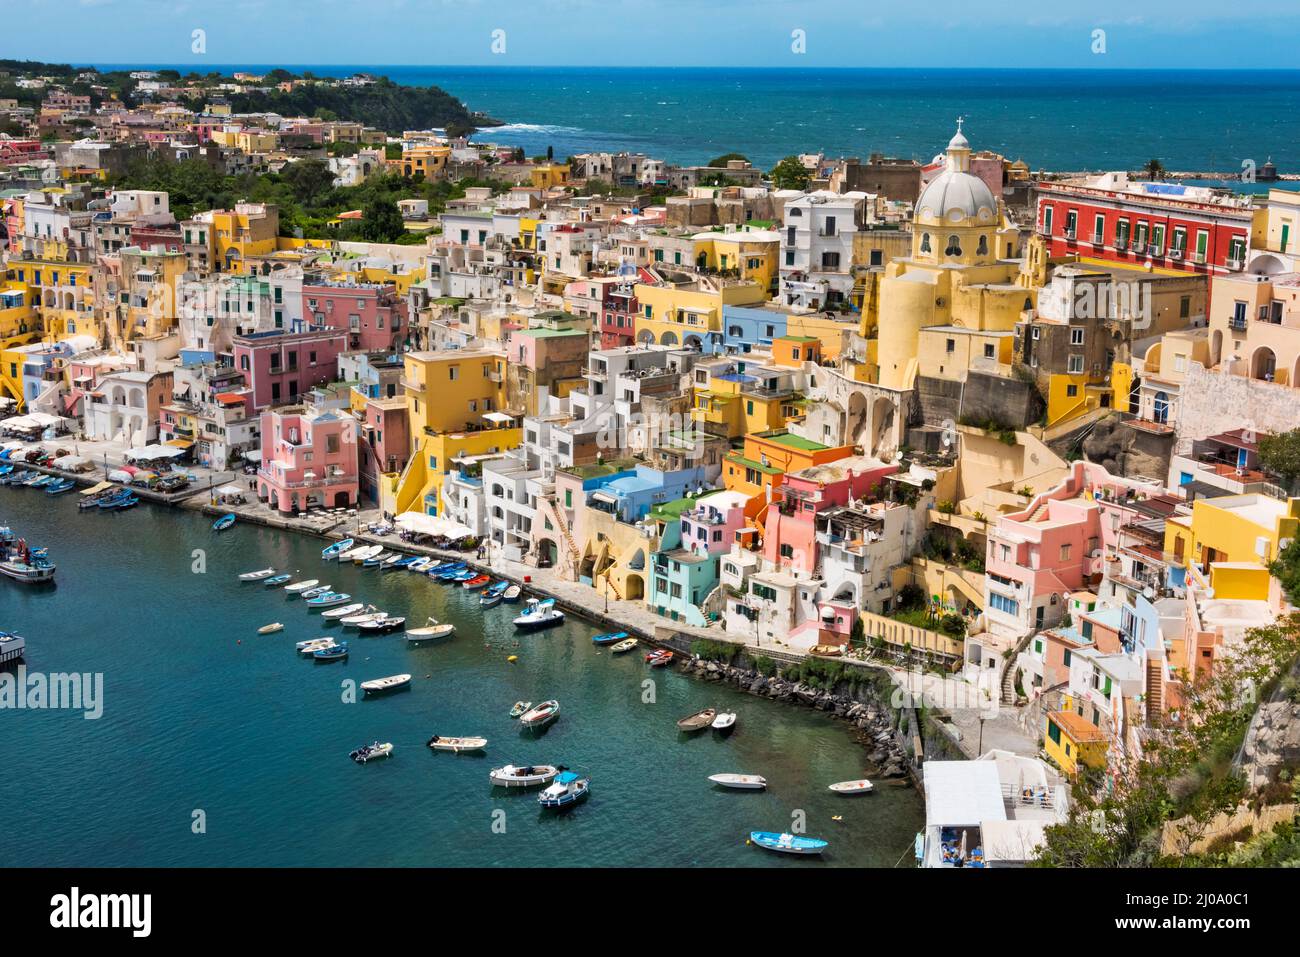 Sanctuary of Santa Maria delle Grazie and colorful houses along the harbor, Procida, Naples, Campania Region, Italy Stock Photo